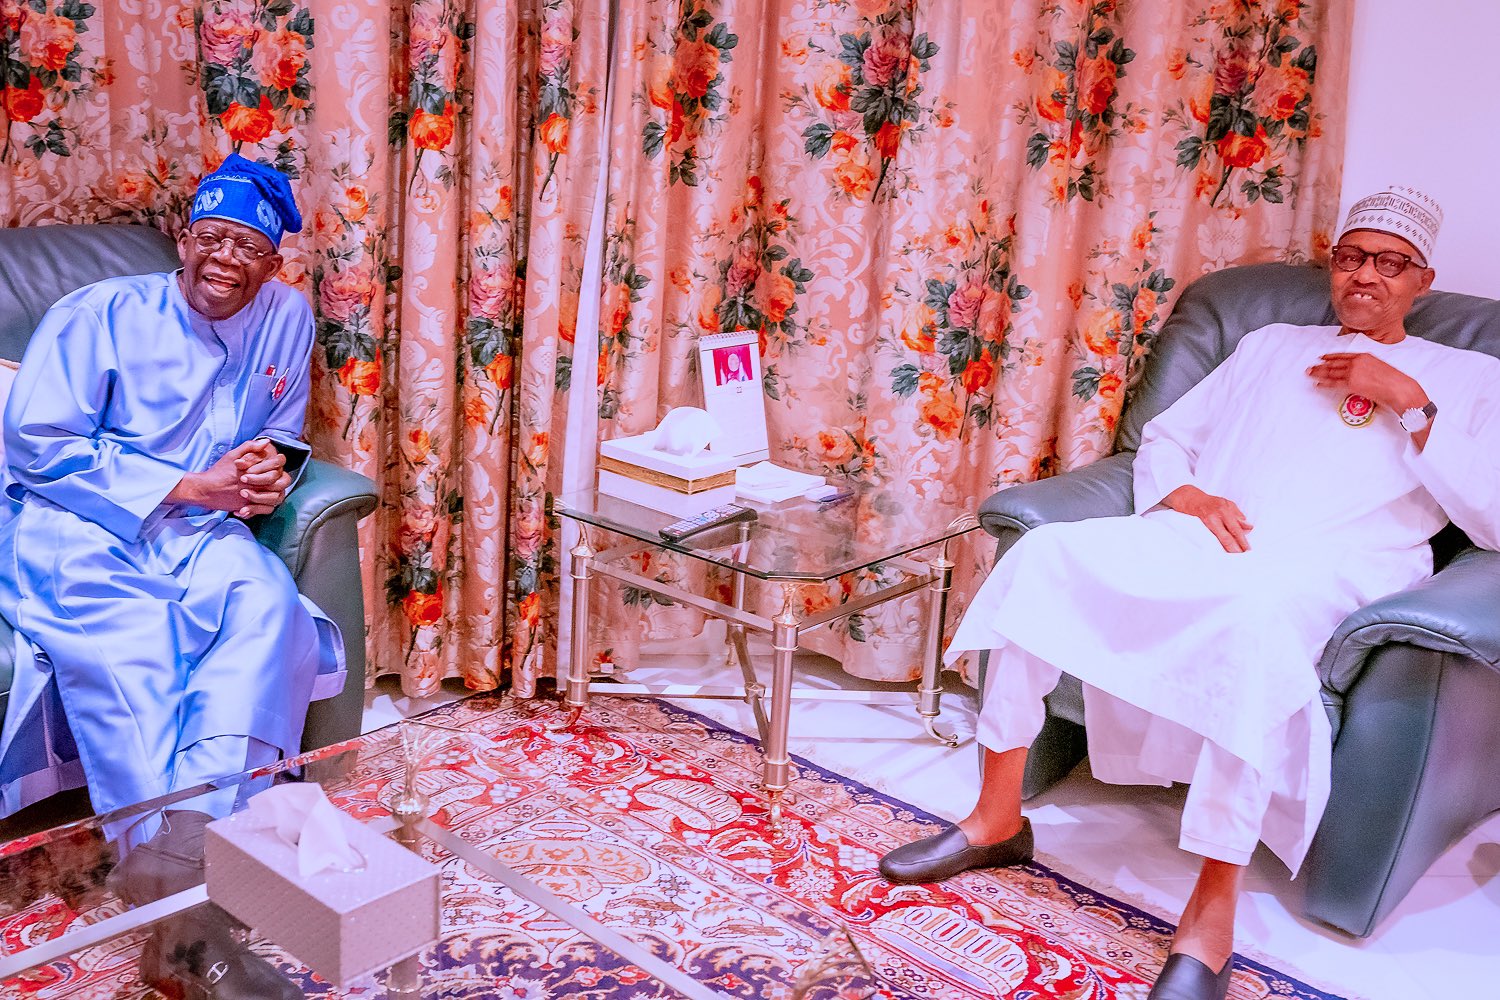 APC presidential candidate Bola Ahmed Tinubu and Nigerian President Muhammadu Buhari. [PHOTO CREDIT: Bashir Ahmad]